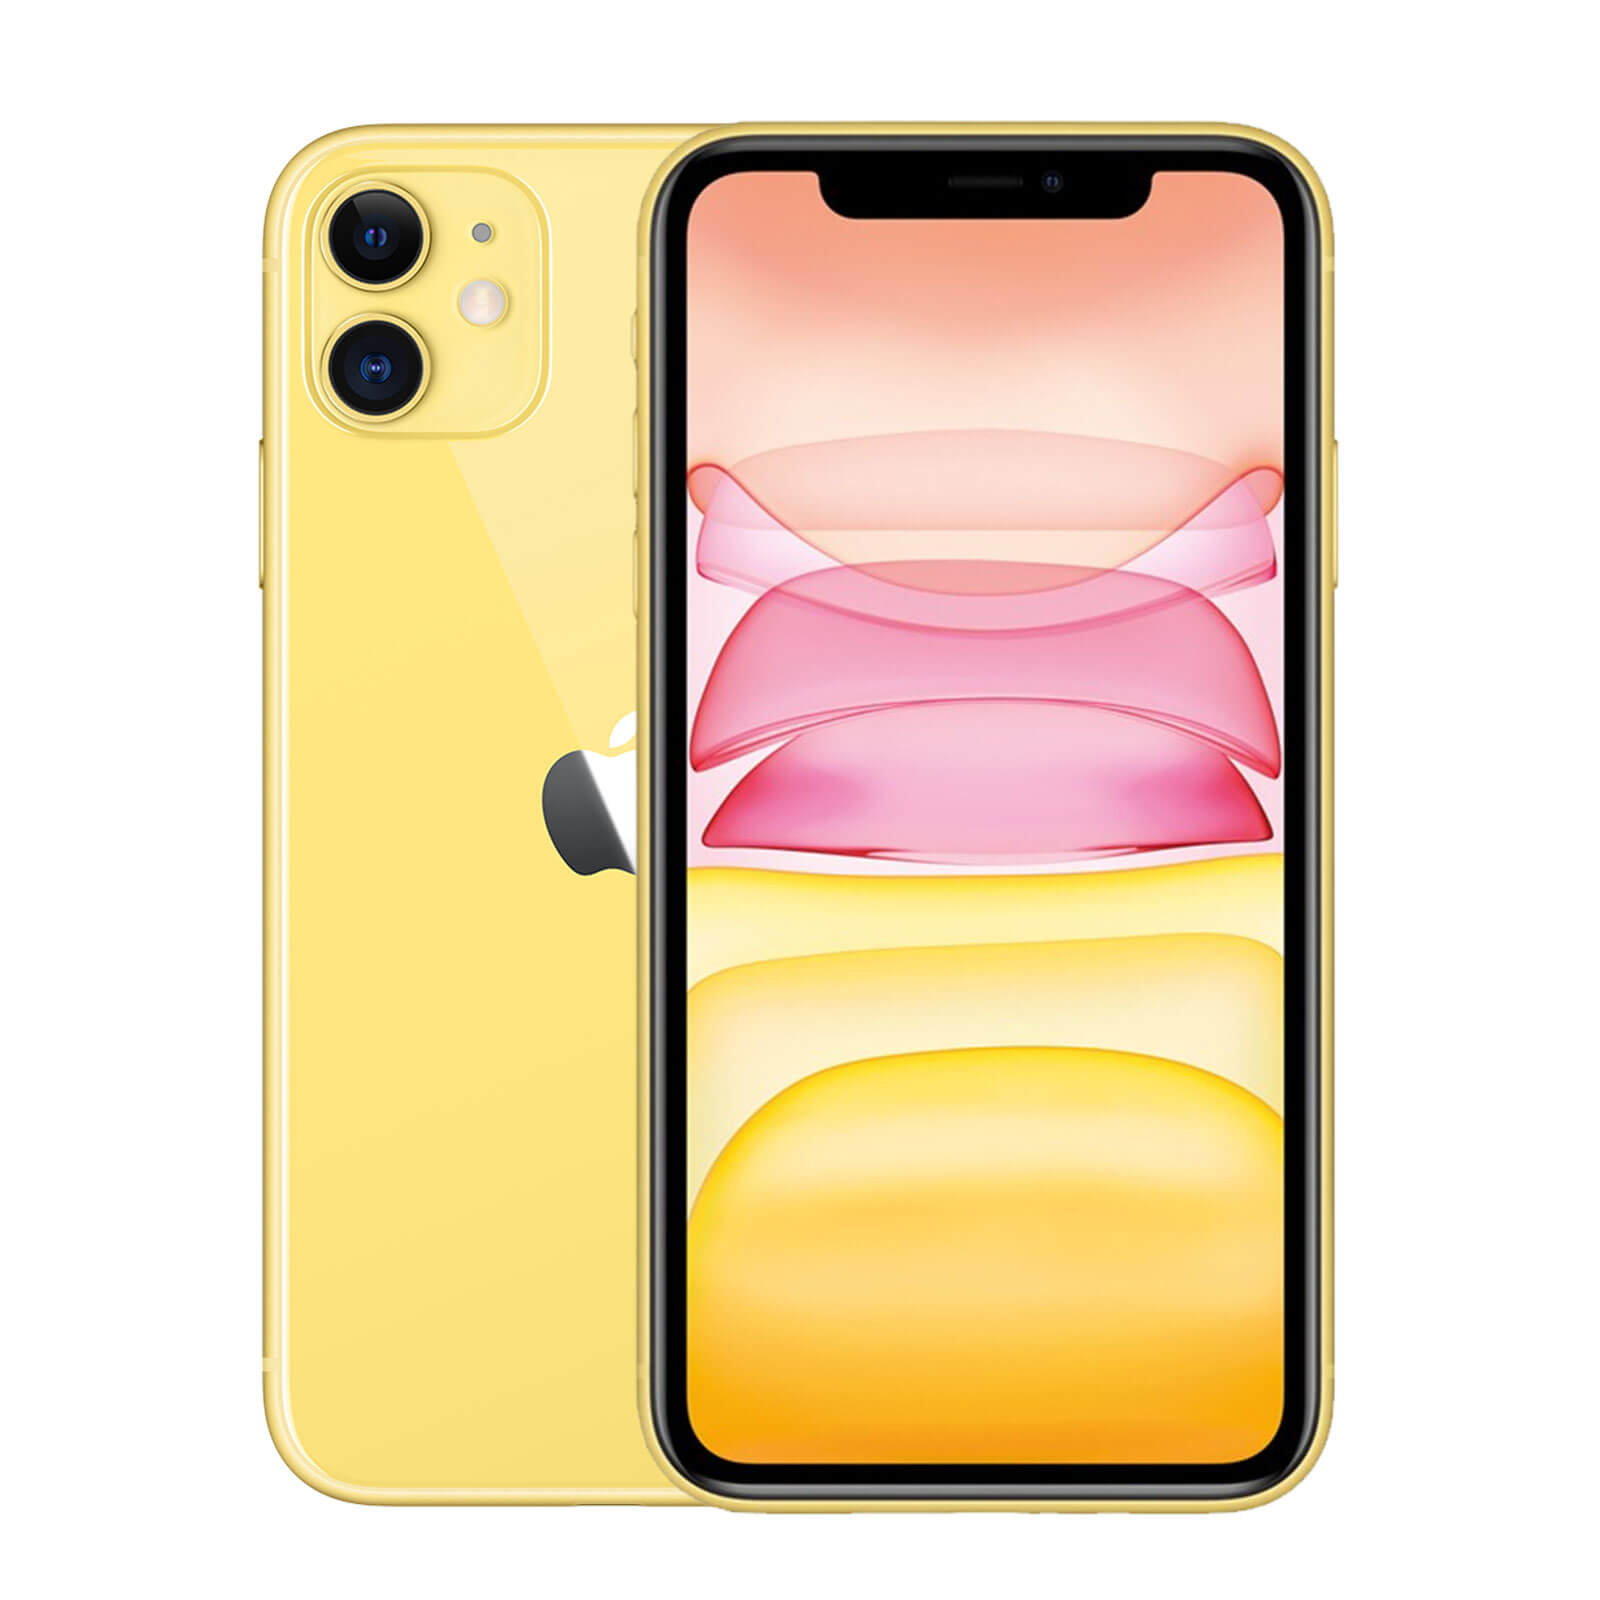 Apple iPhone 11 64GB Yellow Very Good - Unlocked